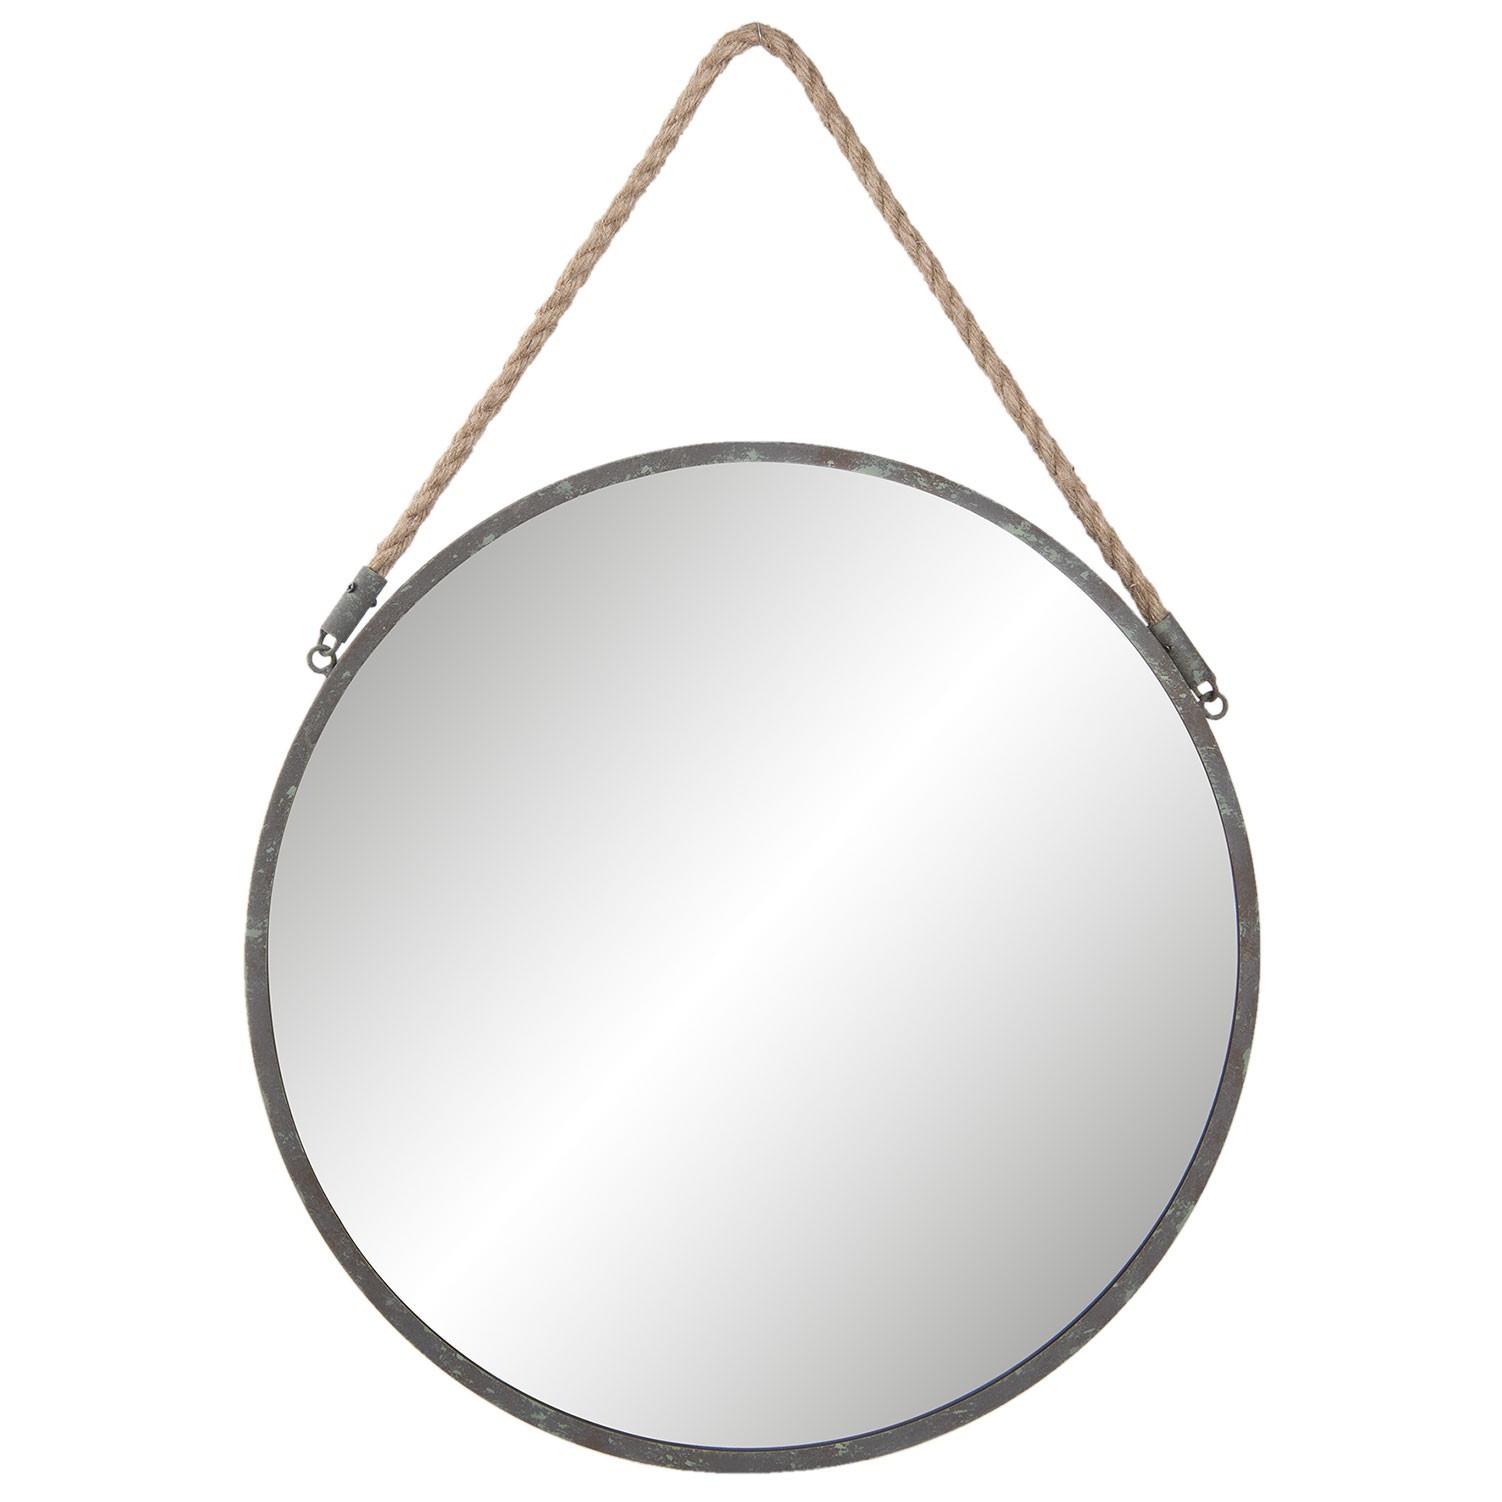 Kulaté kovové zrcadlo na jutovém provazu - Ø 45*1cm Clayre & Eef